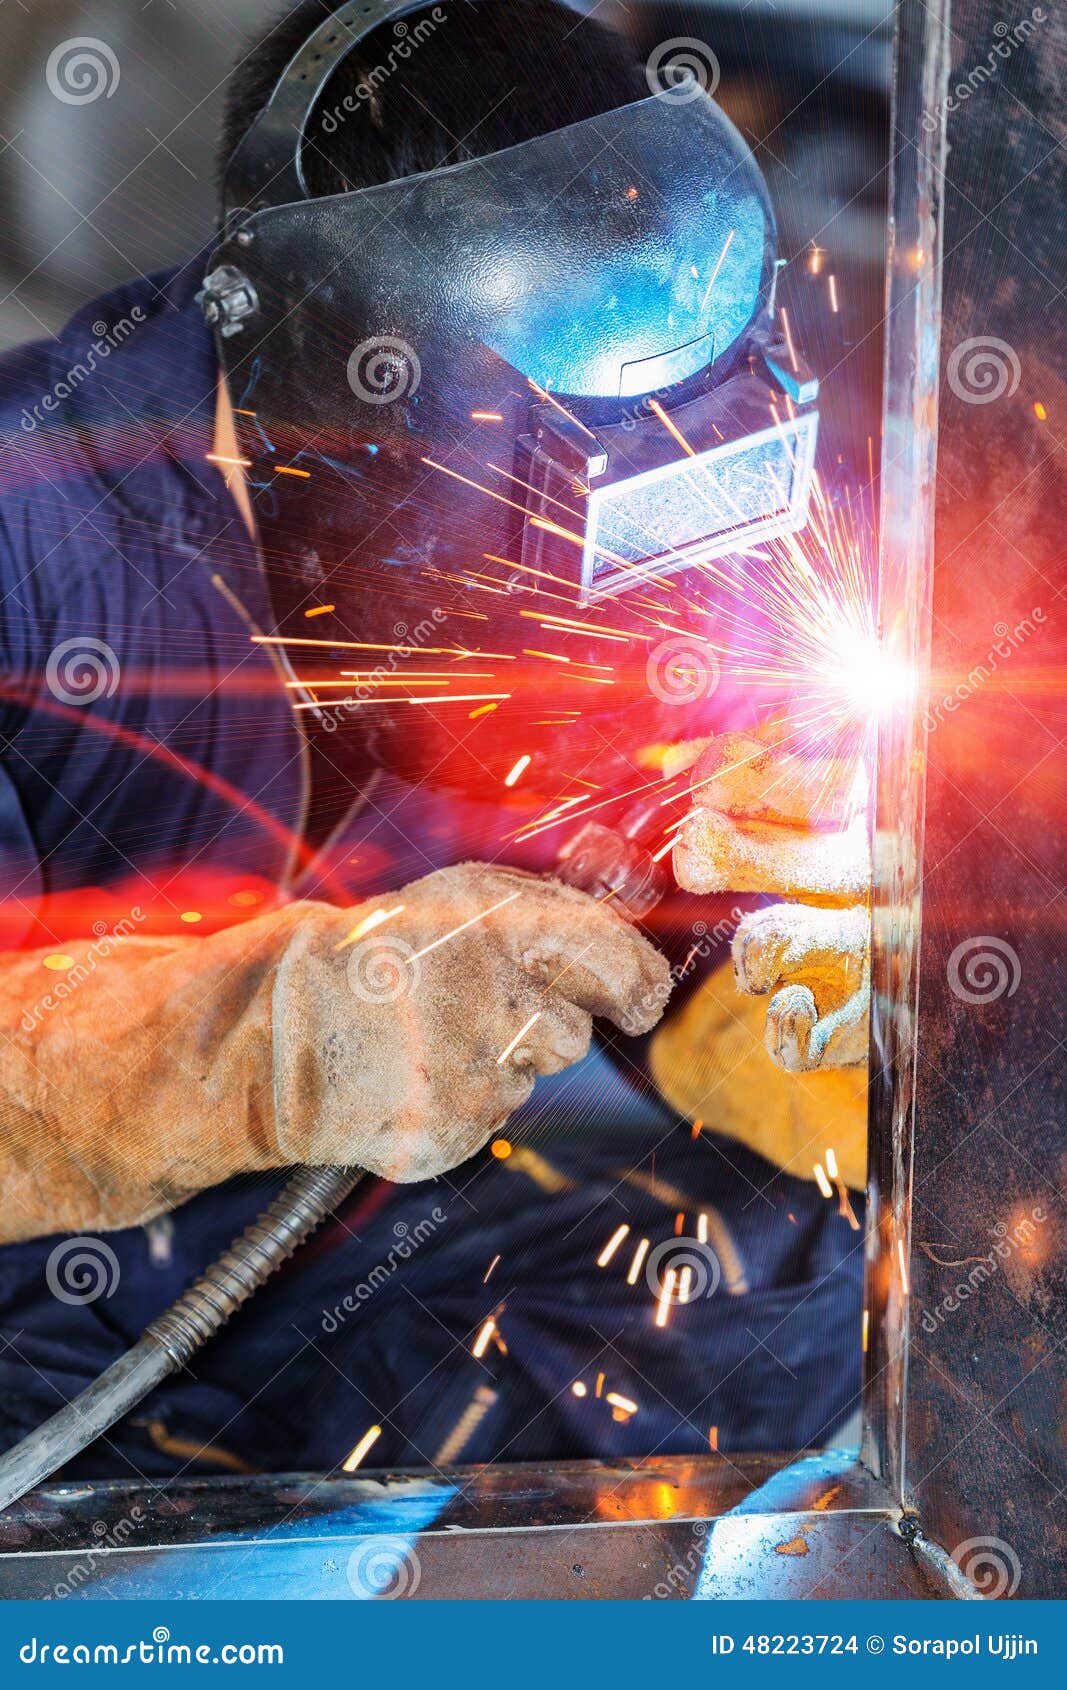 workers welding construction by mig welding